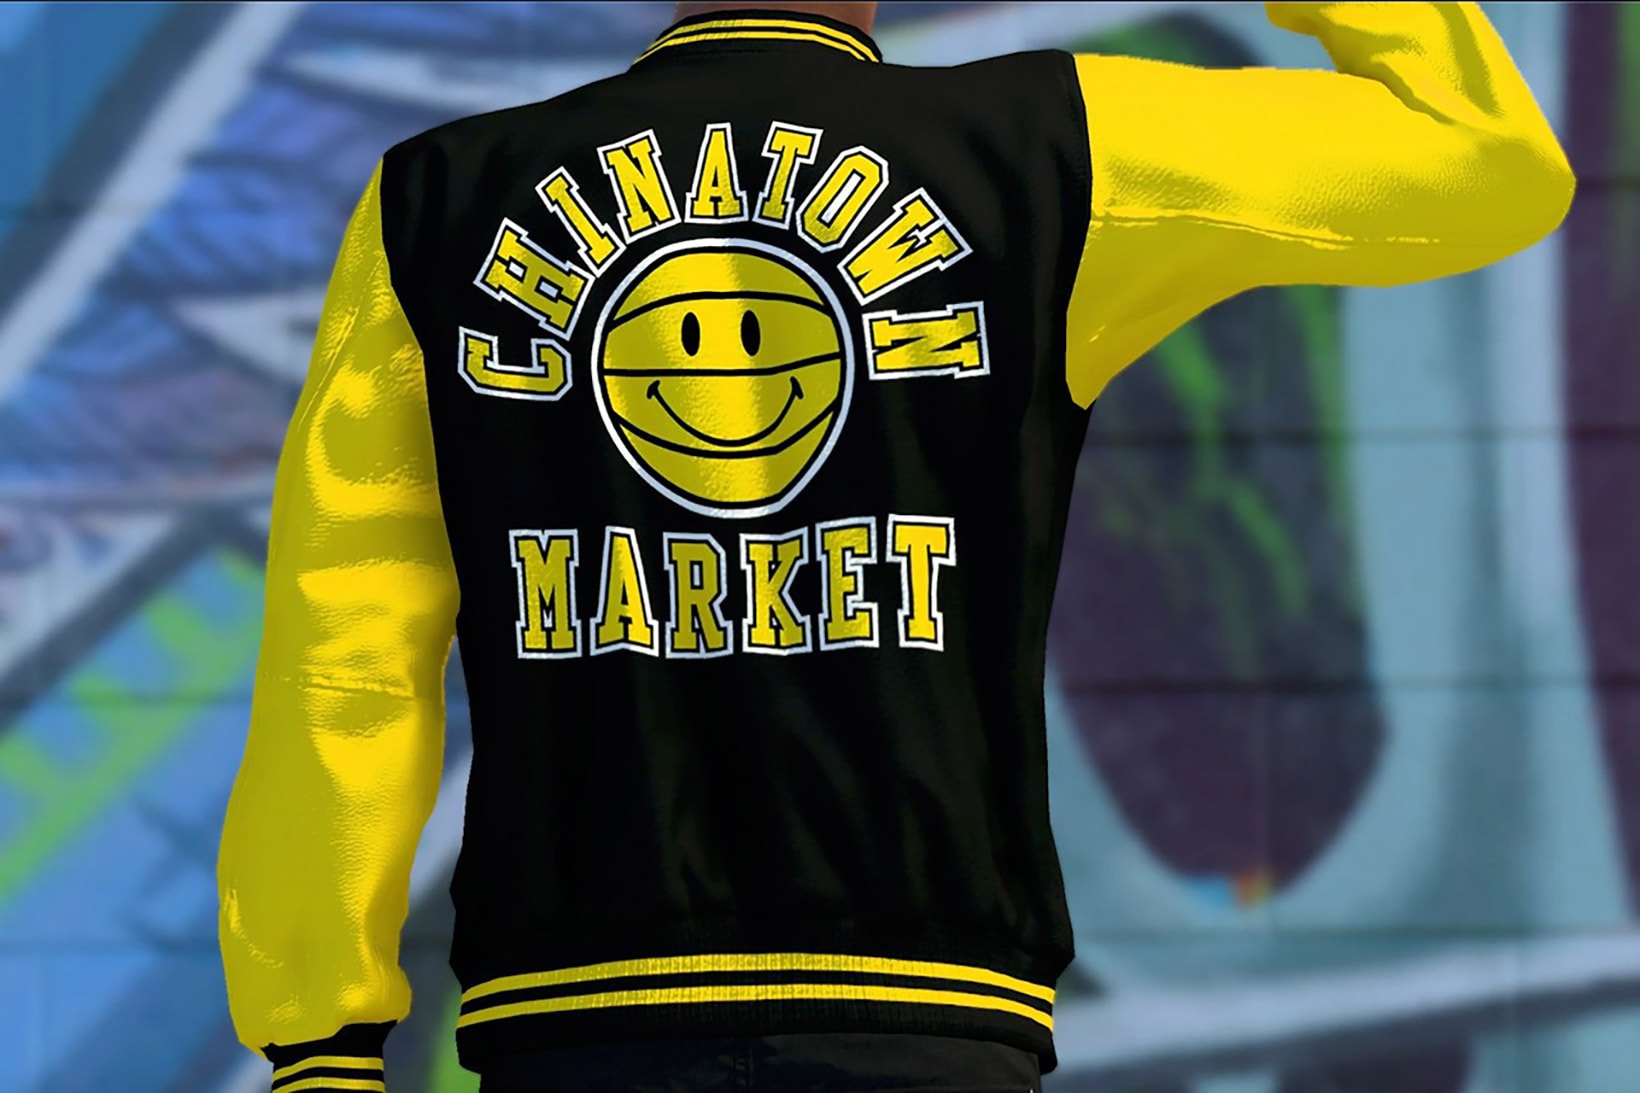 Chinatown Market Rebrand Name Change Fashion Jacket Yellow Black